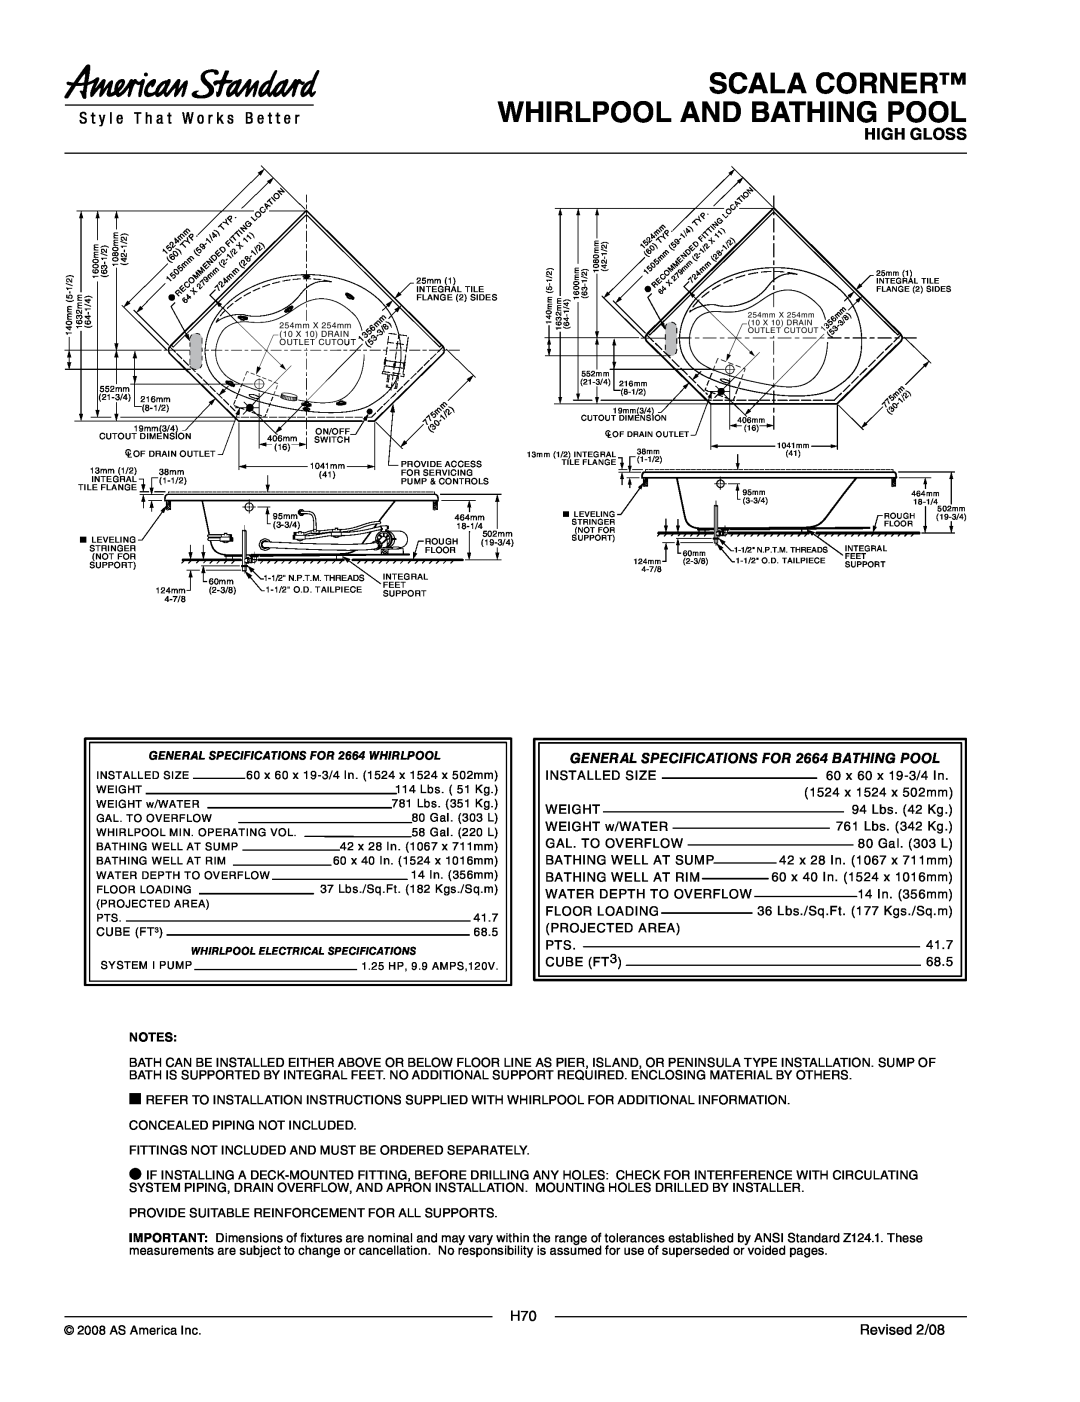 American Standard 2664.218C, 2664.118C dimensions Scala Corner Whirlpool And Bathing Pool, High Gloss, Revised 2/08 